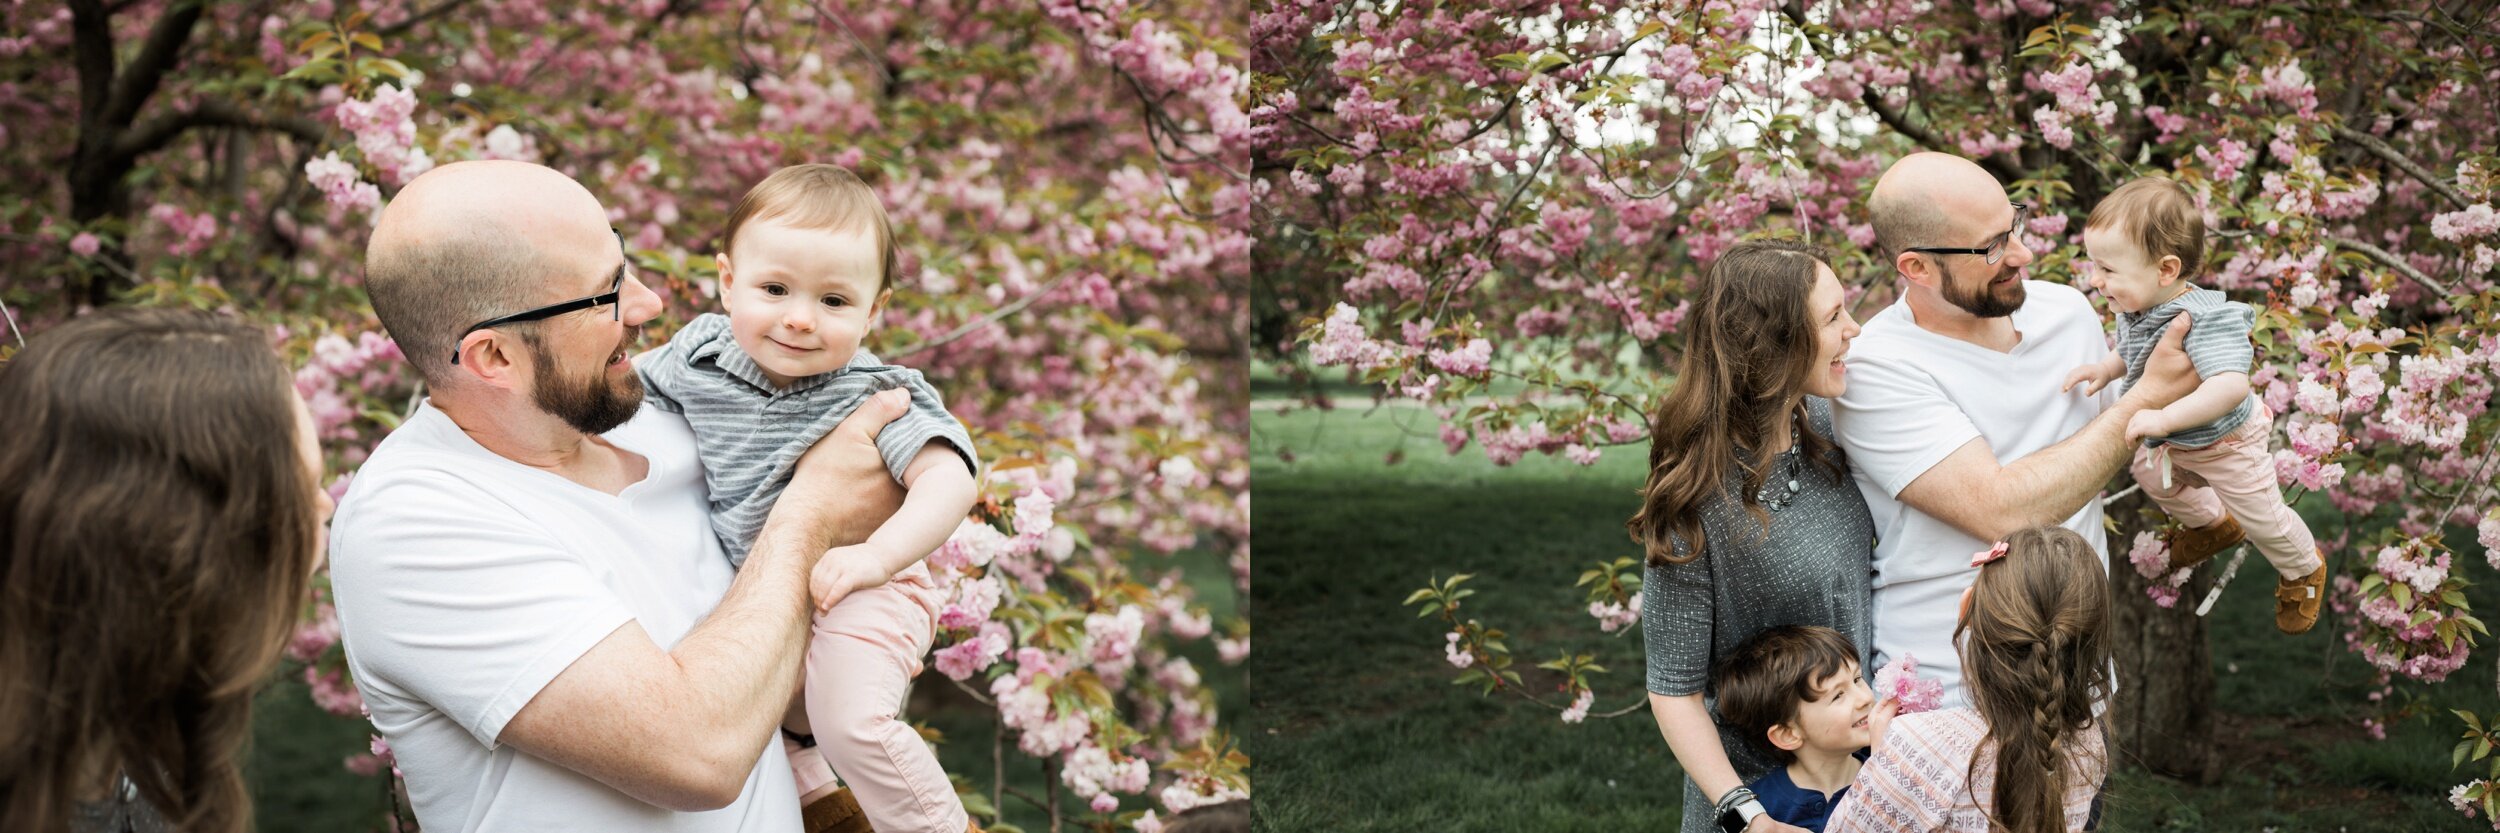 Spring Family Photos at Loose Park in Kansas City - 6